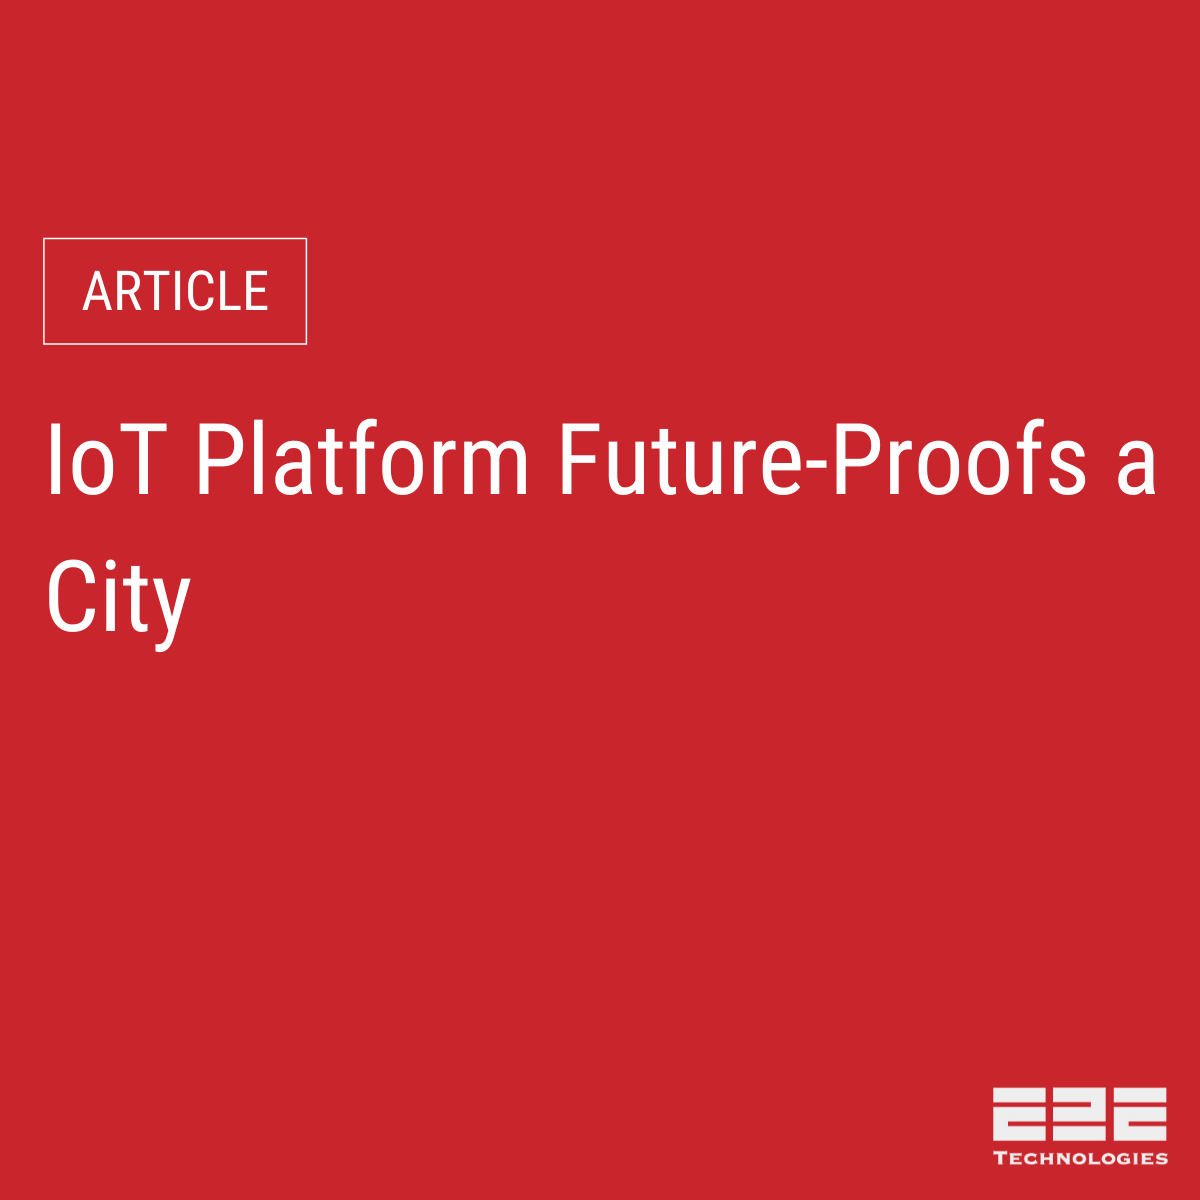 IoT Platform Future-Proofs a City